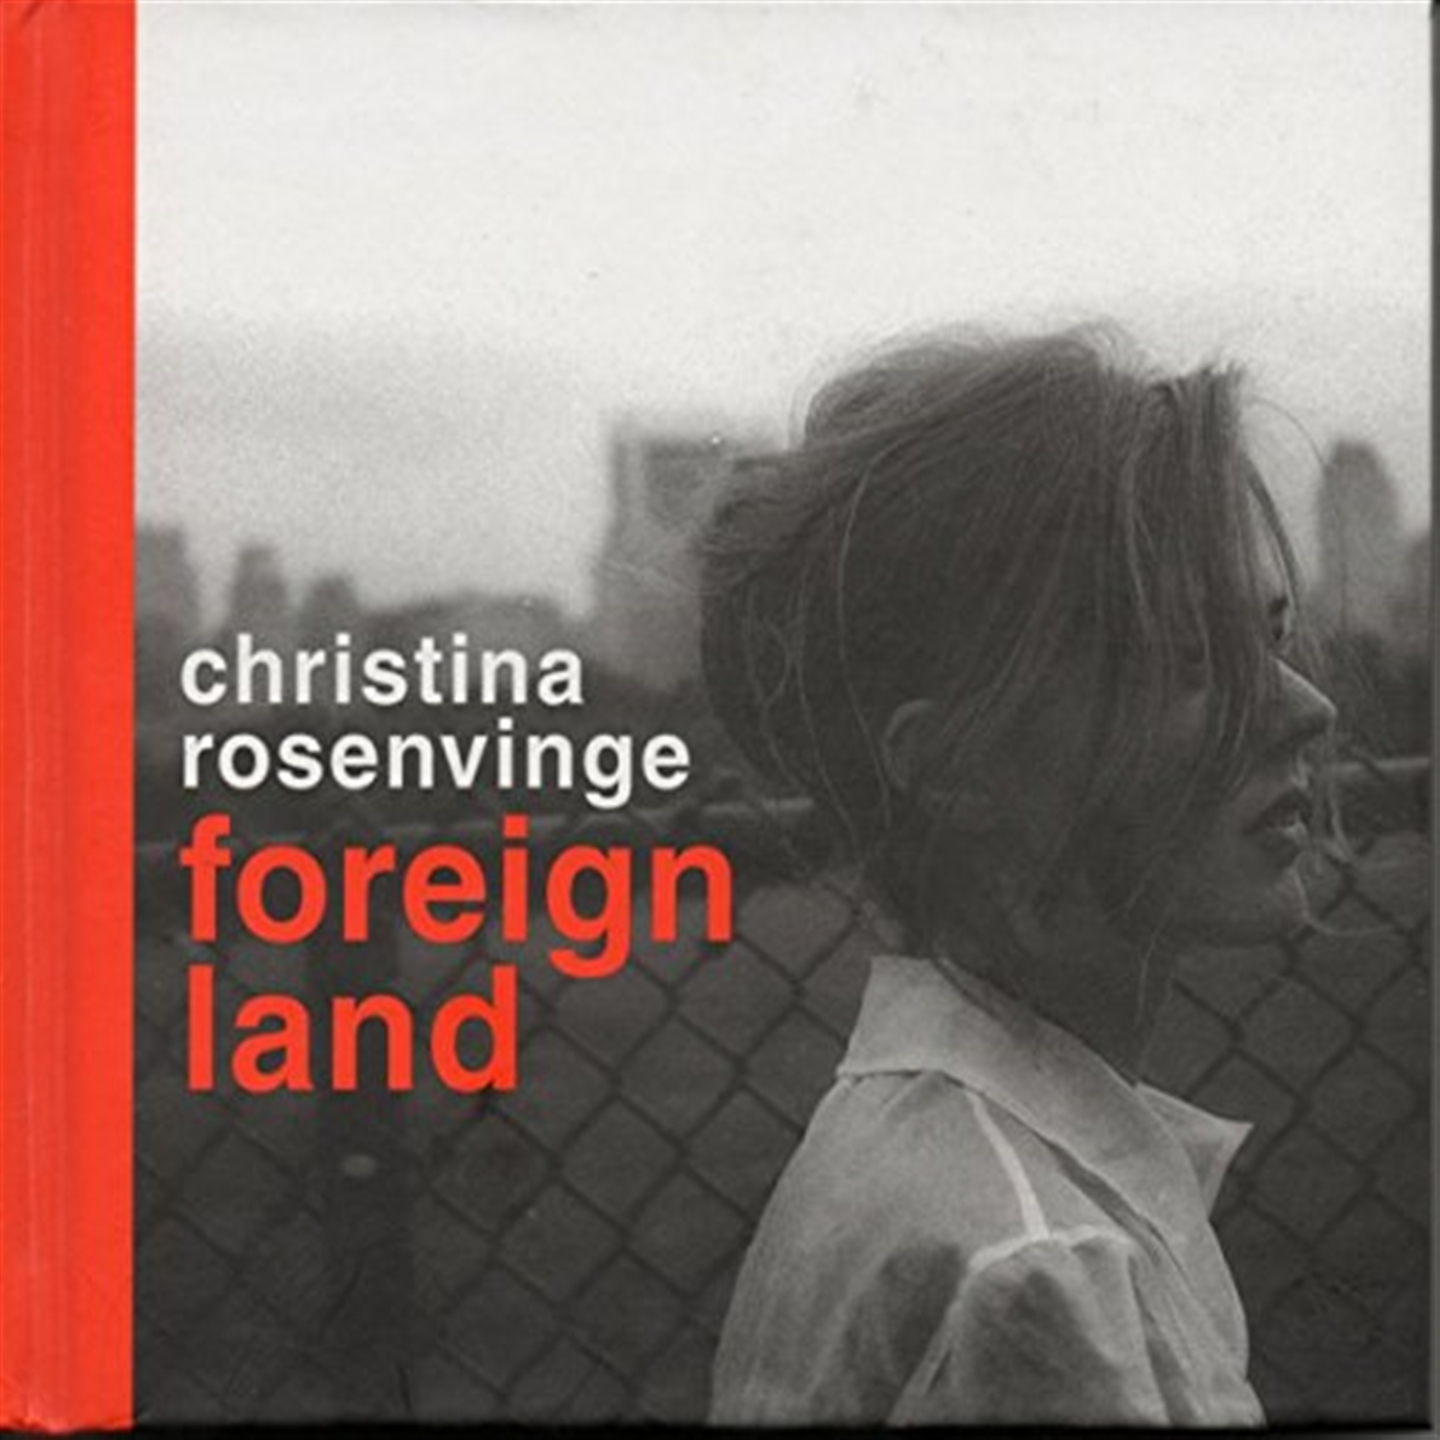 Rosenvinge Christina - Foreign Land - Foto 1 di 1